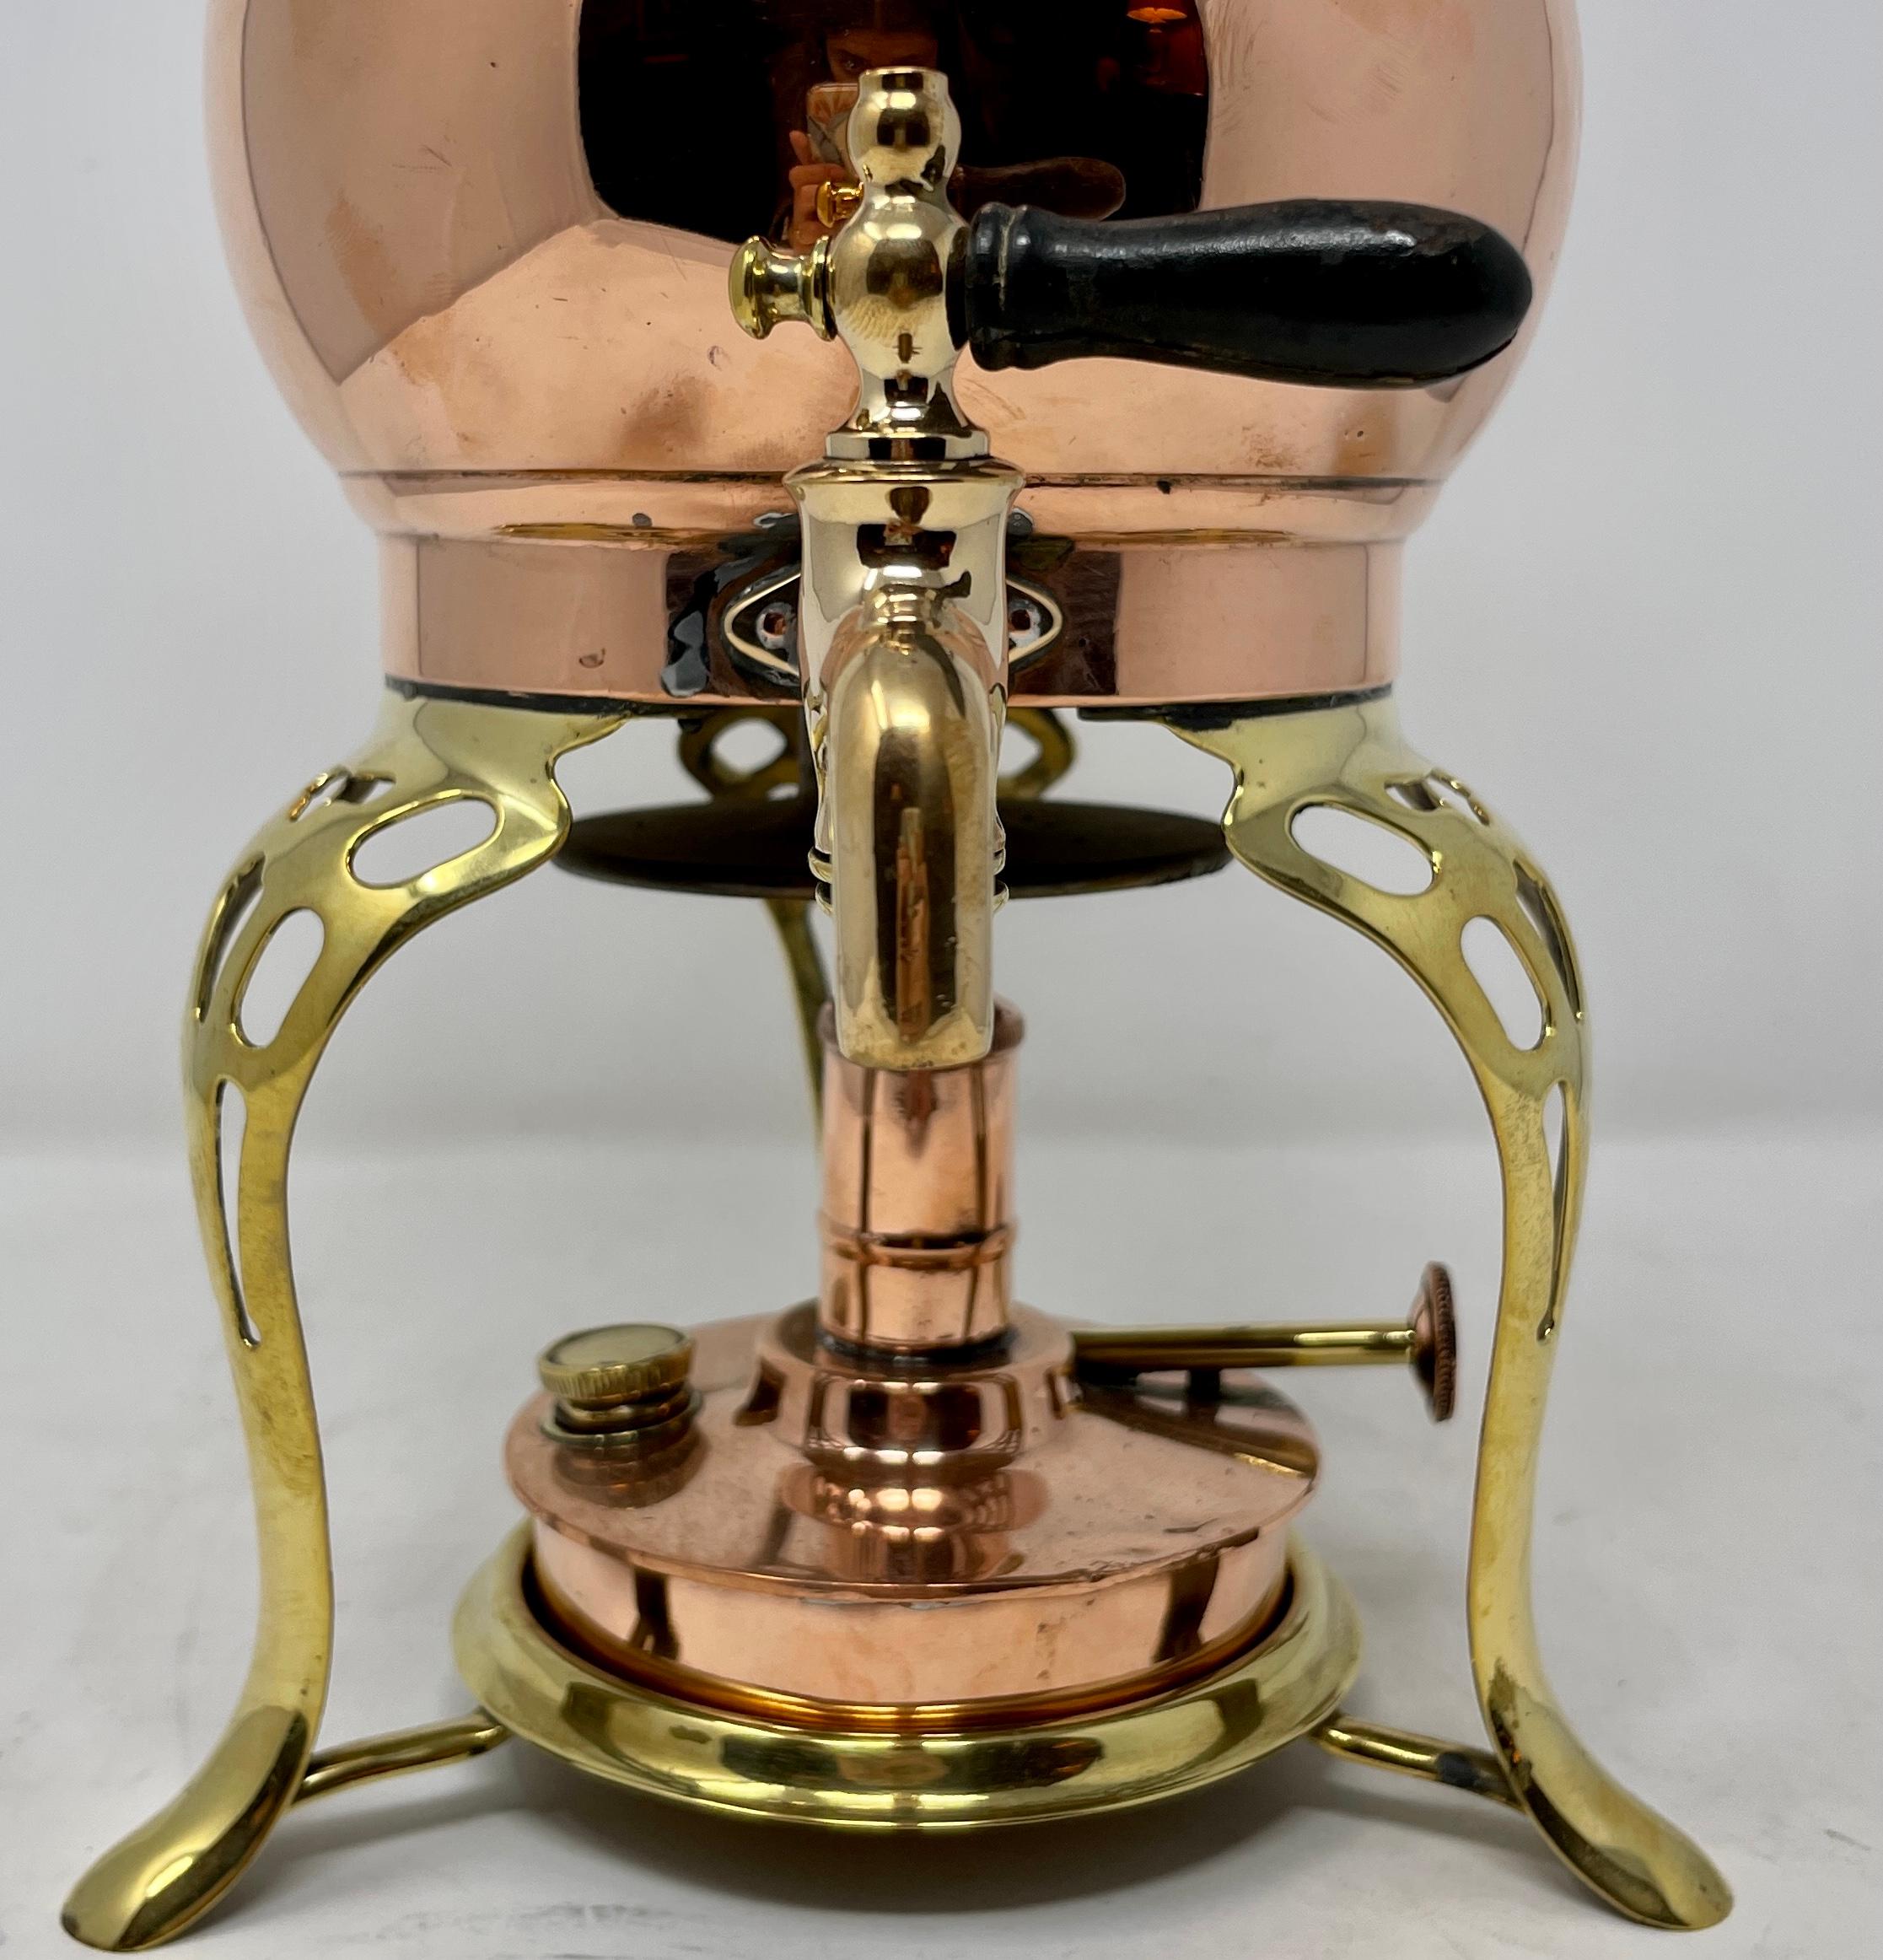 European Antique Early Copper Percolator